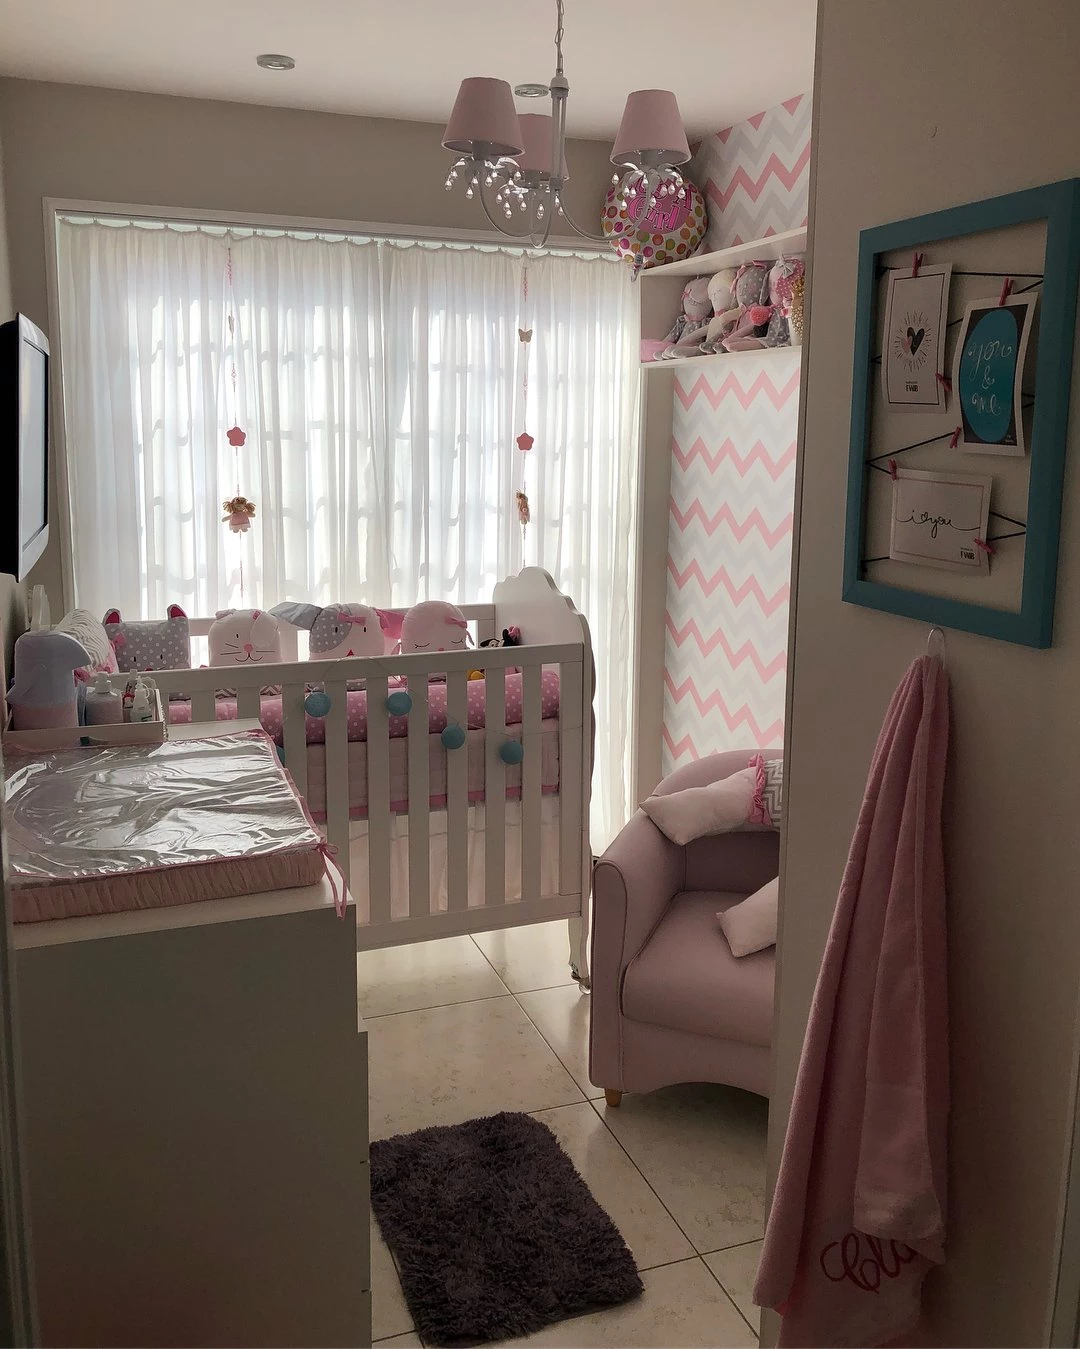 Foto de cortina para quarto de bebe 48 - 51